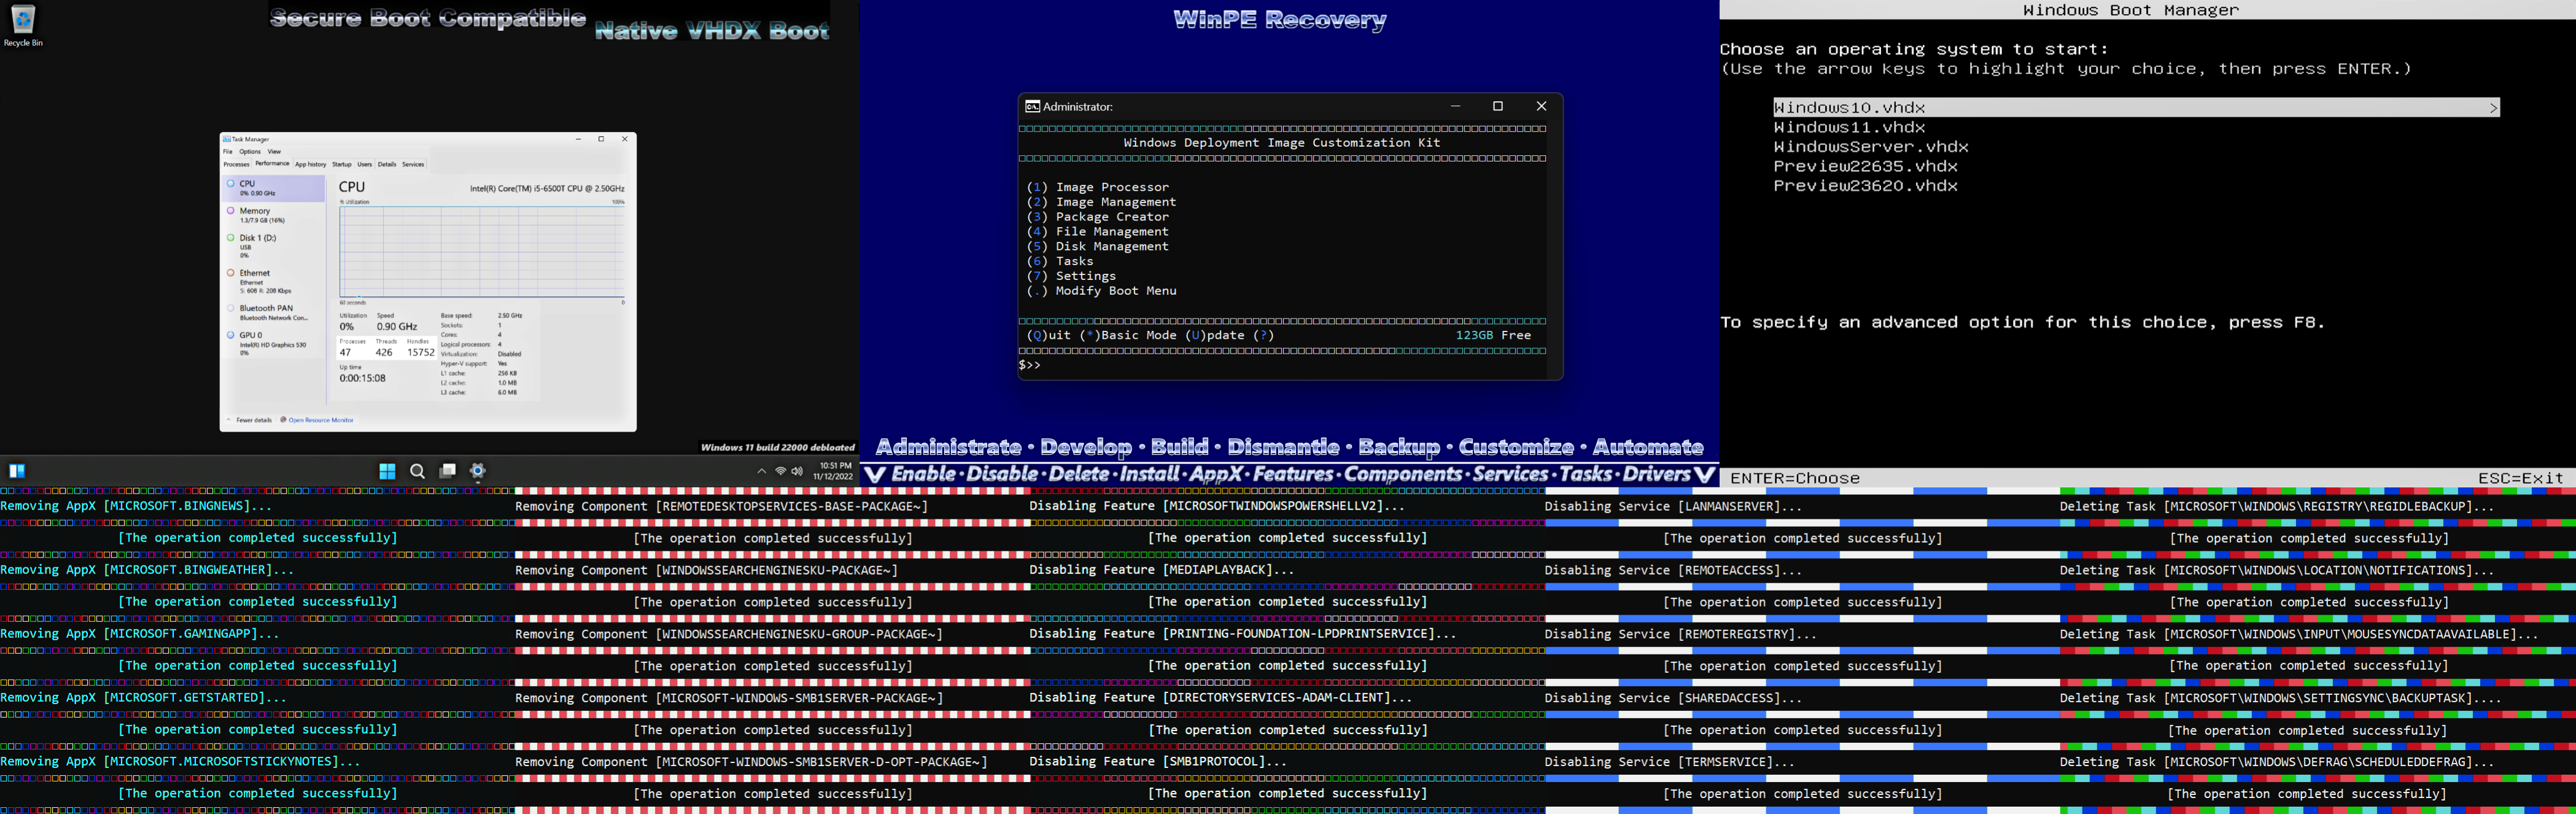 Windows Deployment Image Customization Kit (Windick) v1.1.5.8 00